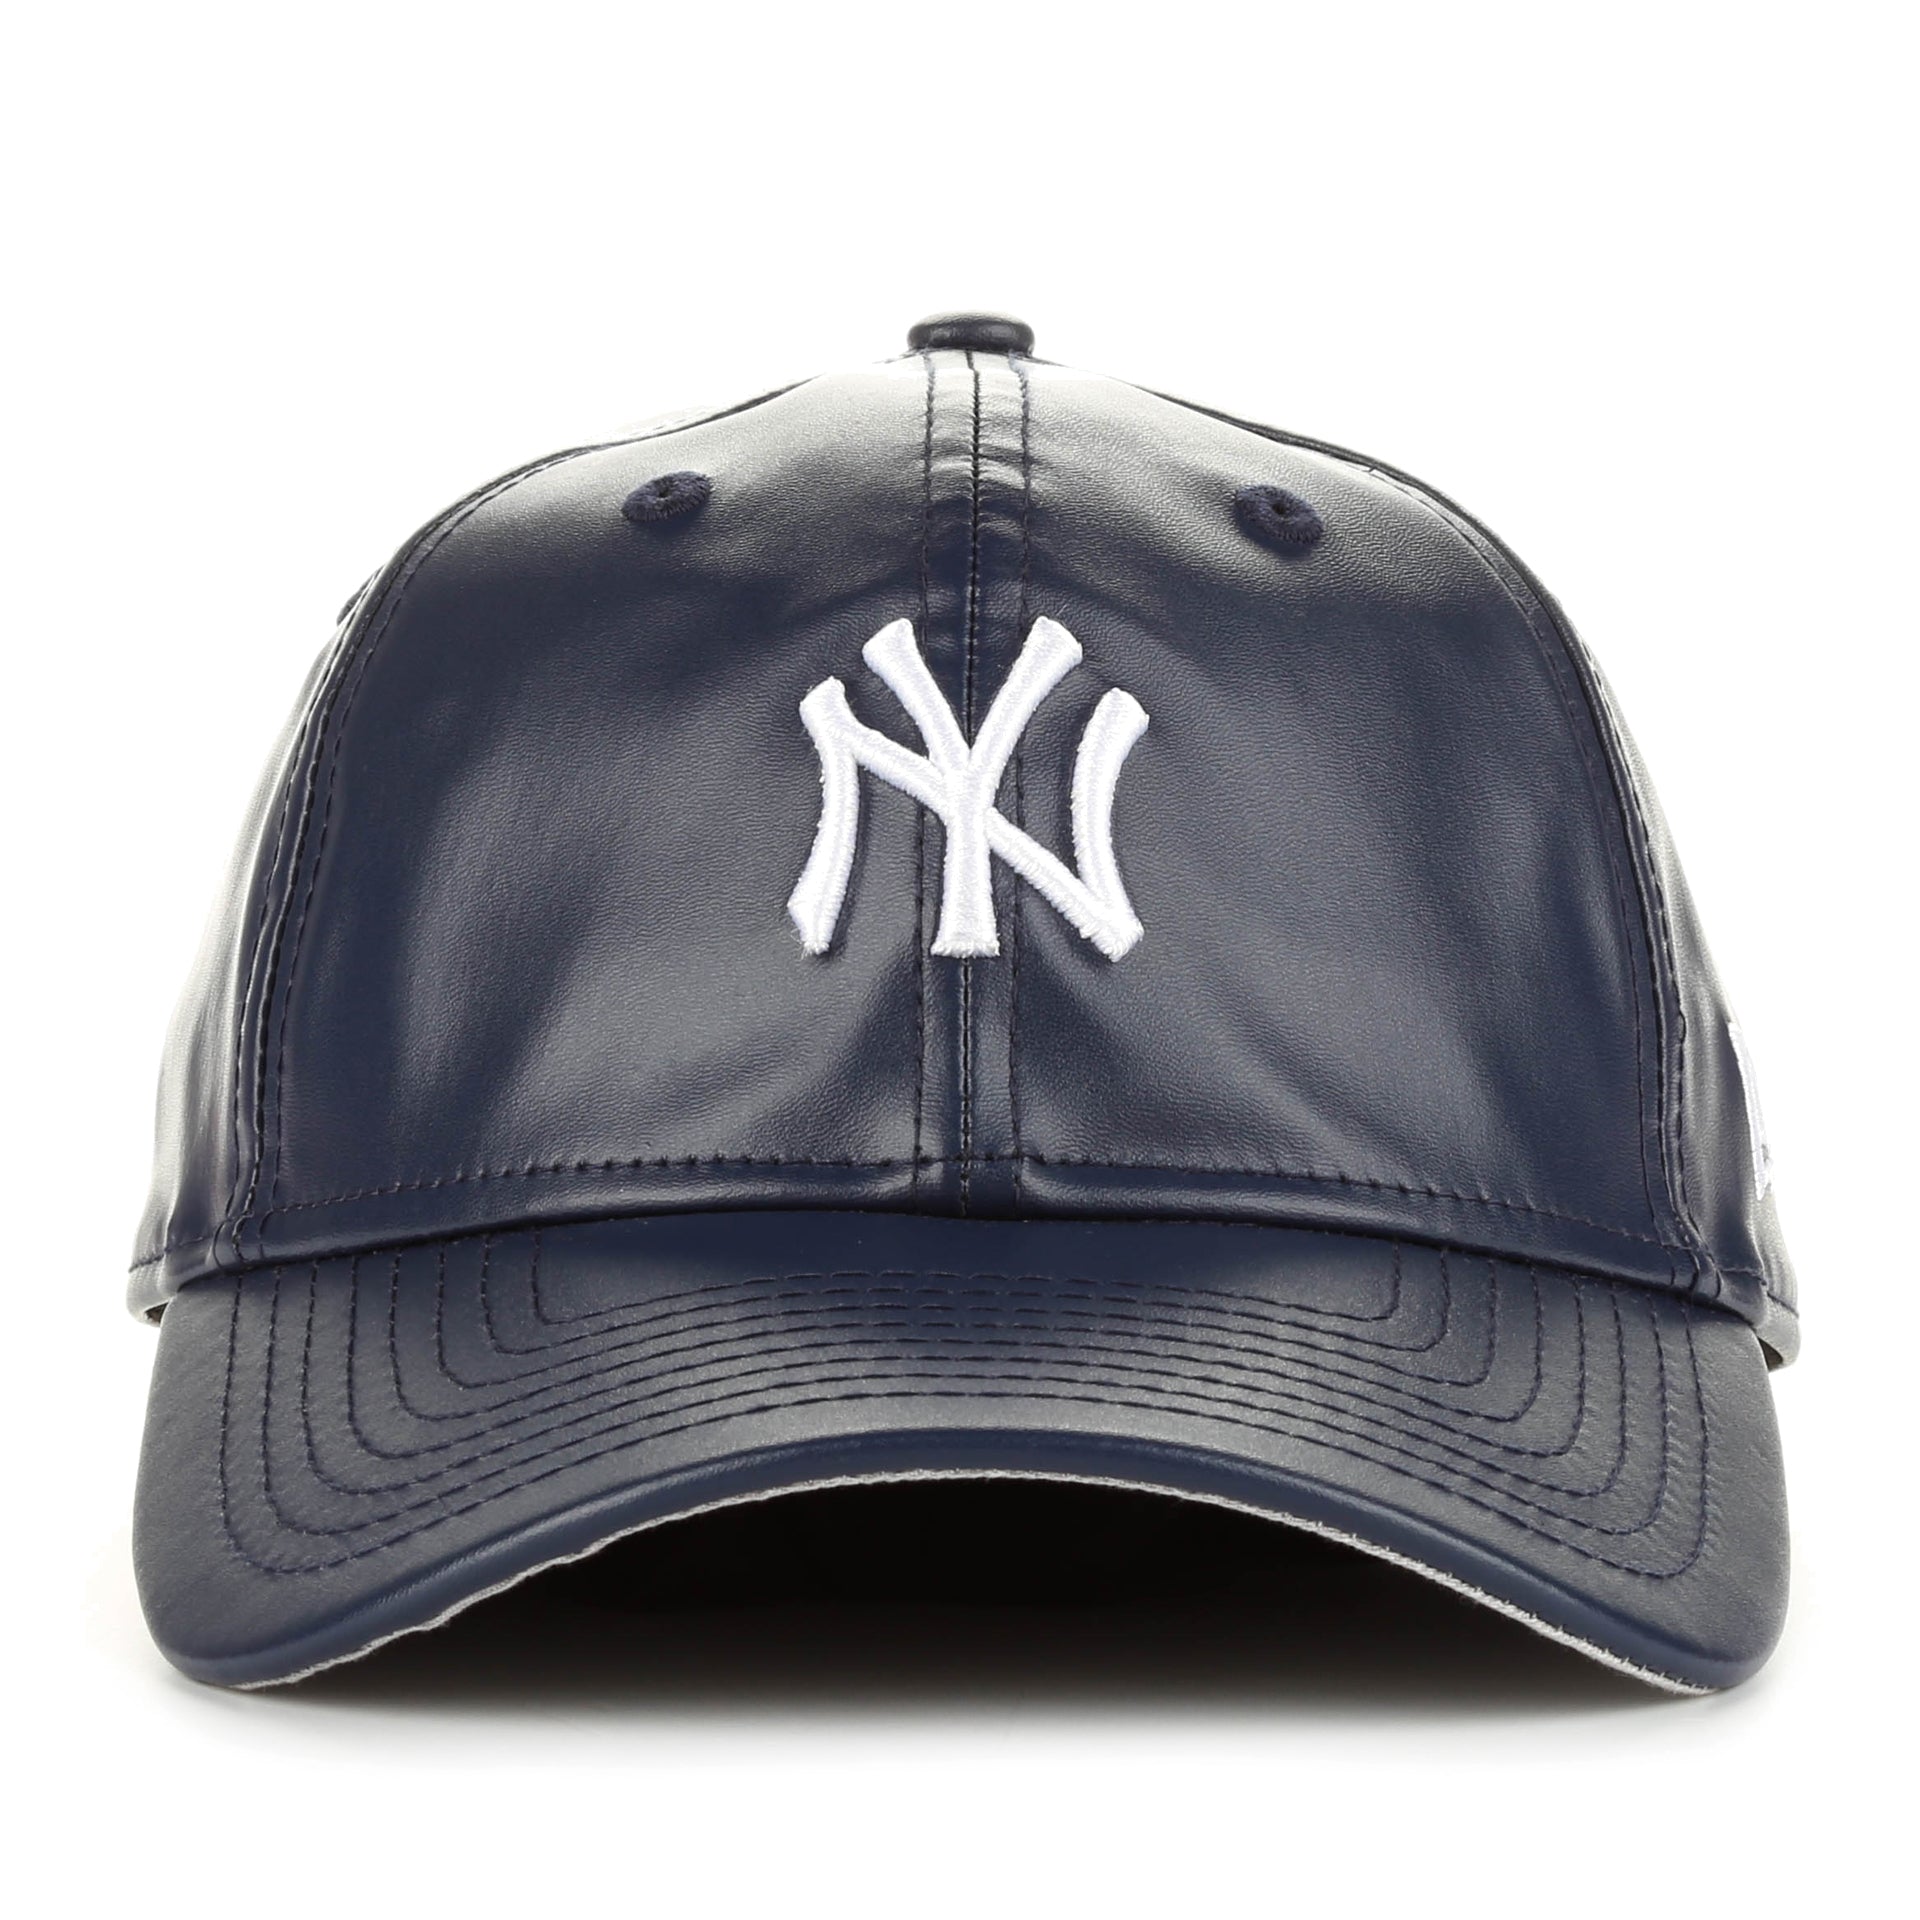 New Era 9Twenty PU Leather Squad Cap - New York Yankees/Navy - New Star